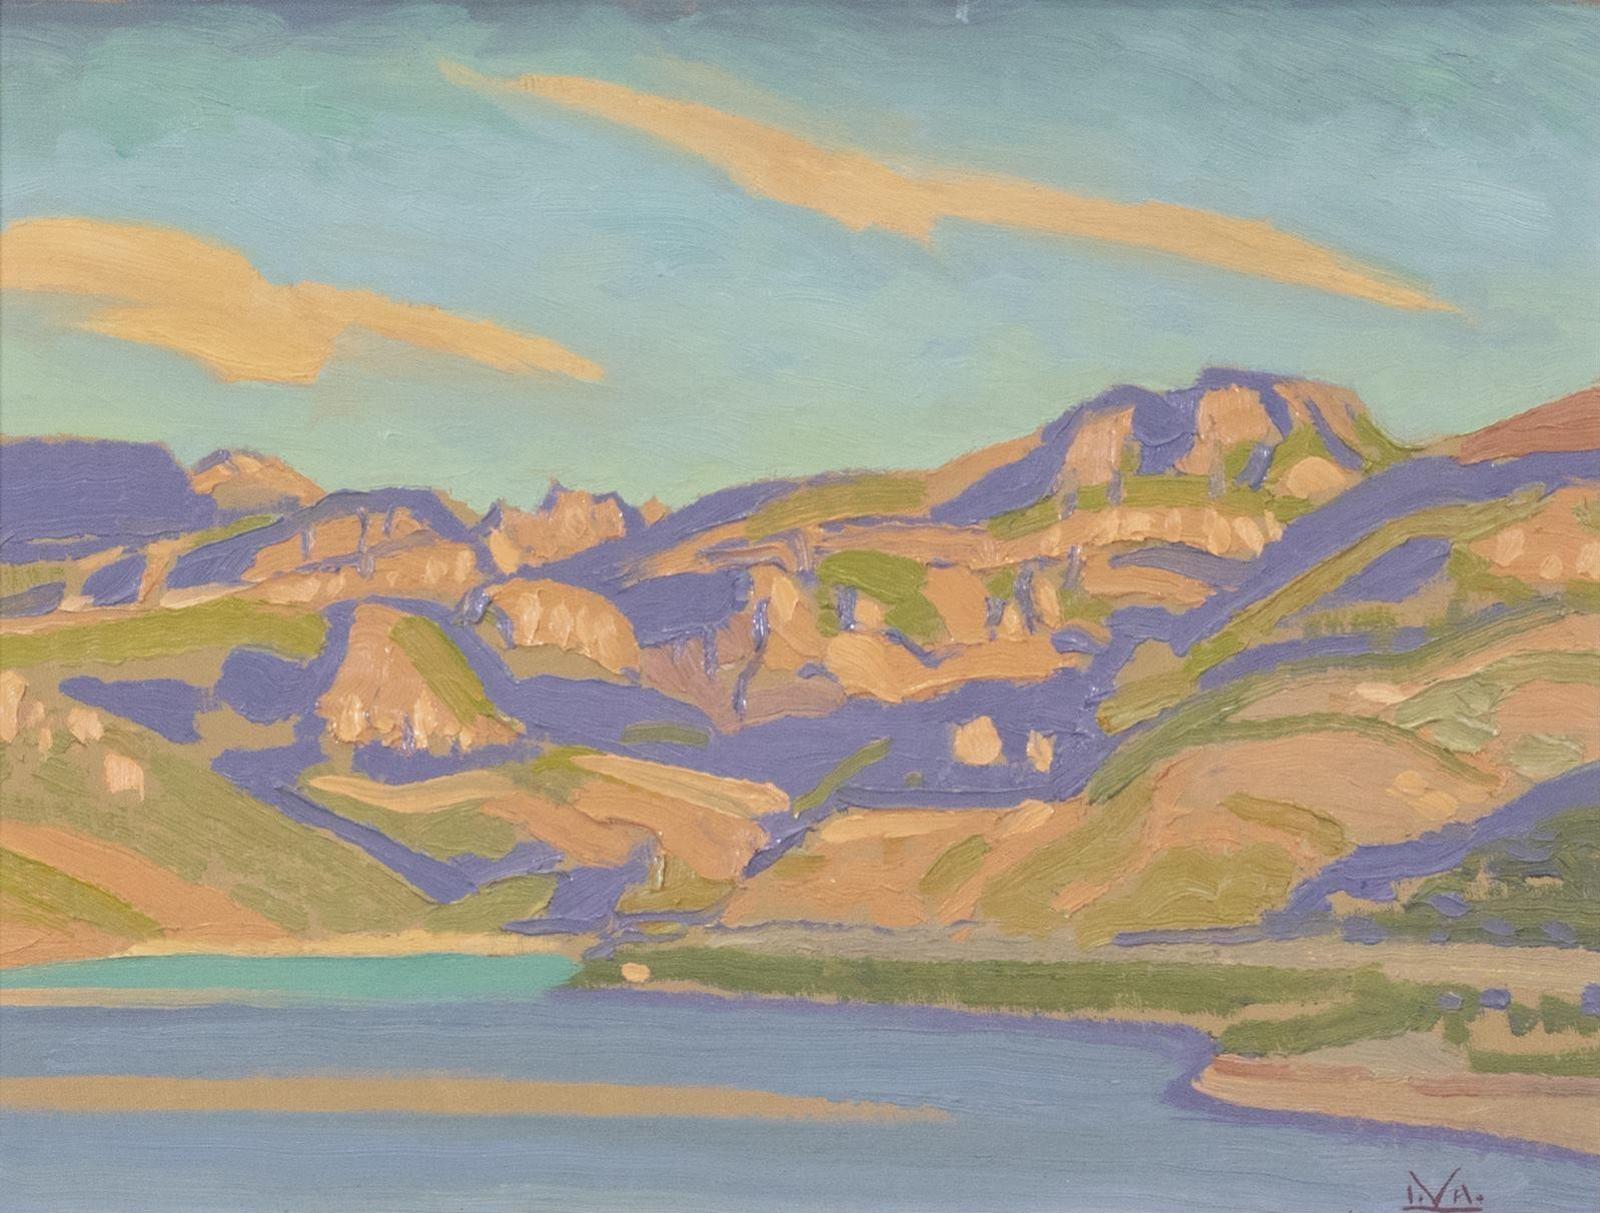 Illingworth Holey (Buck) Kerr (1905-1989) - Mormon Lake, Evening Light; 1981